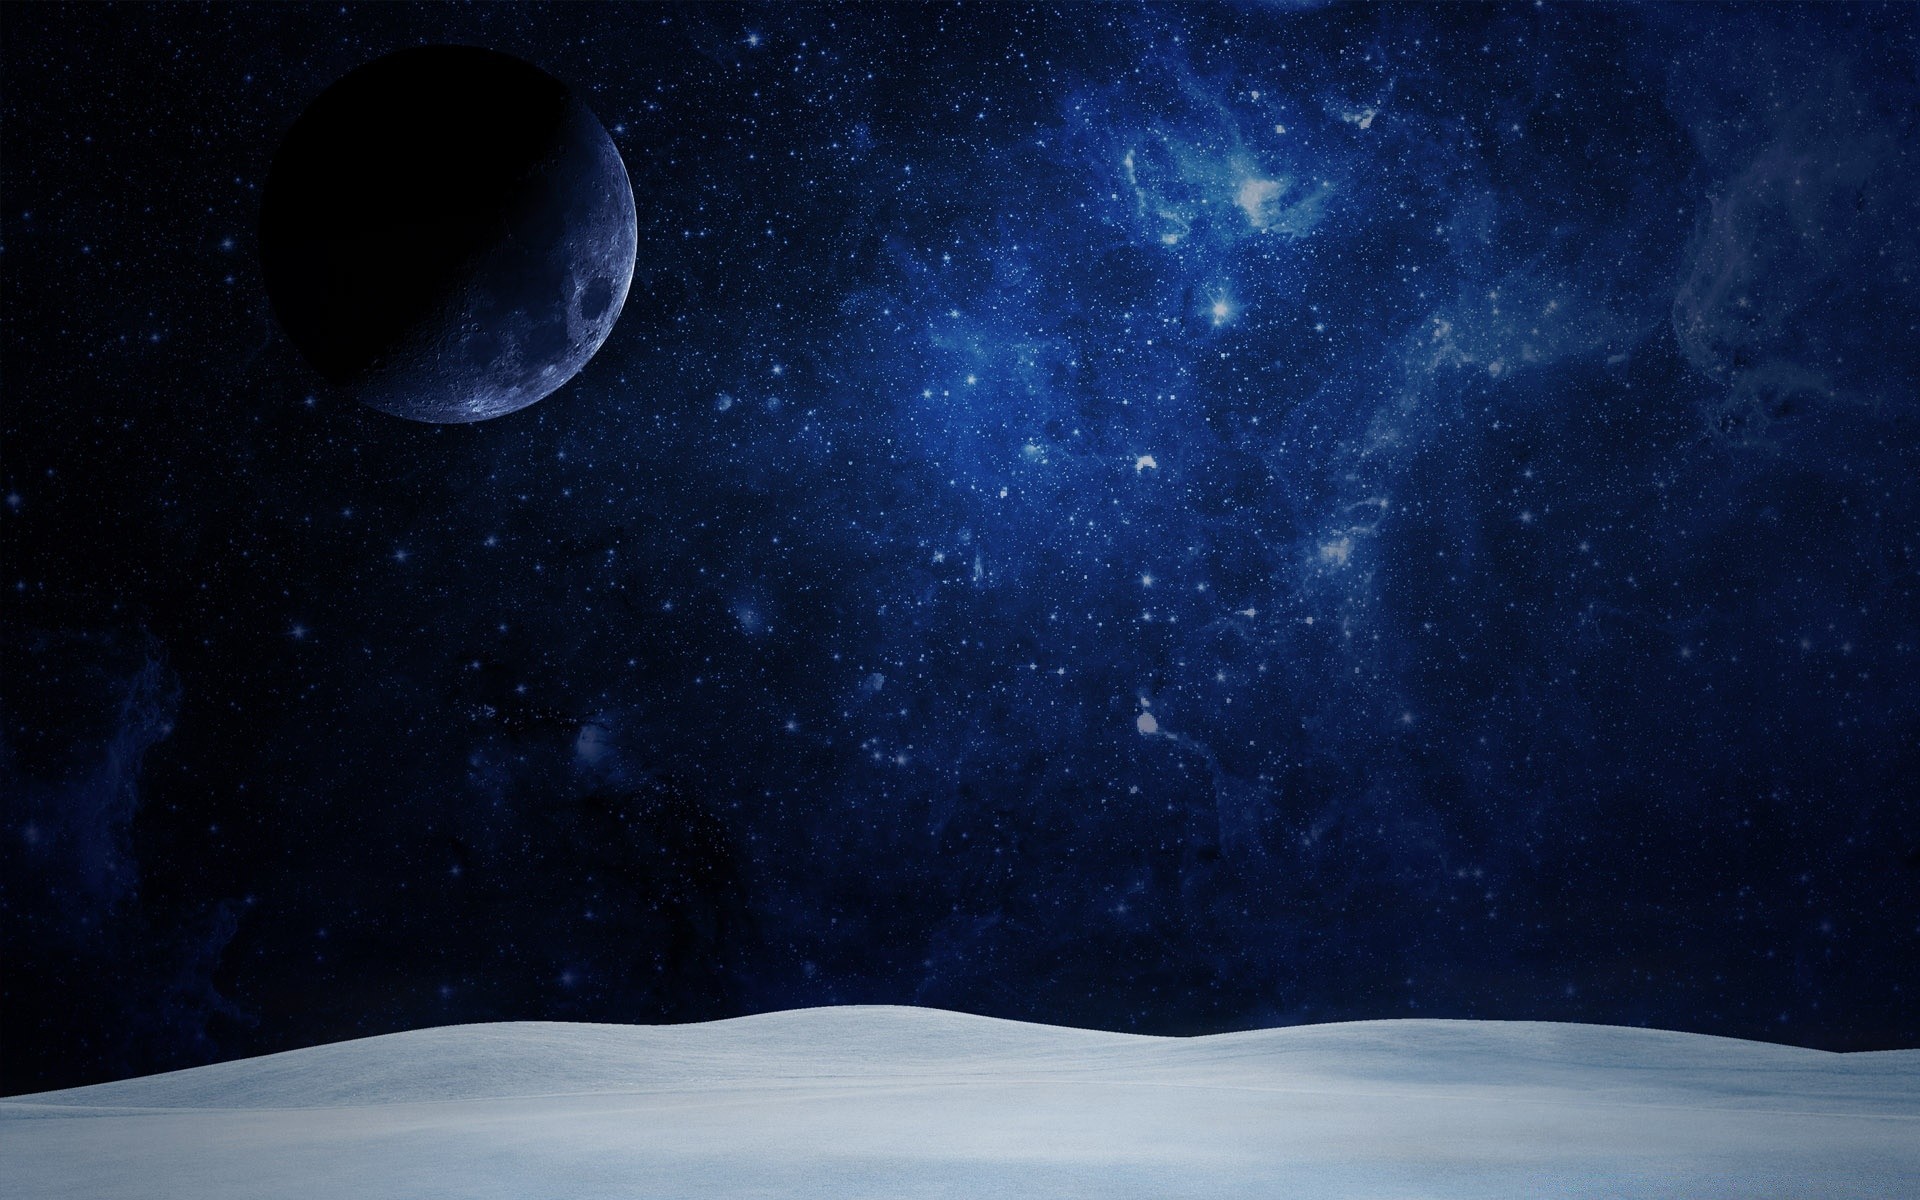 creative astronomy moon galaxy astrology space planet exploration sky constellation infinity nebula cosmos dark full moon stellar solar celestial eclipse telescope